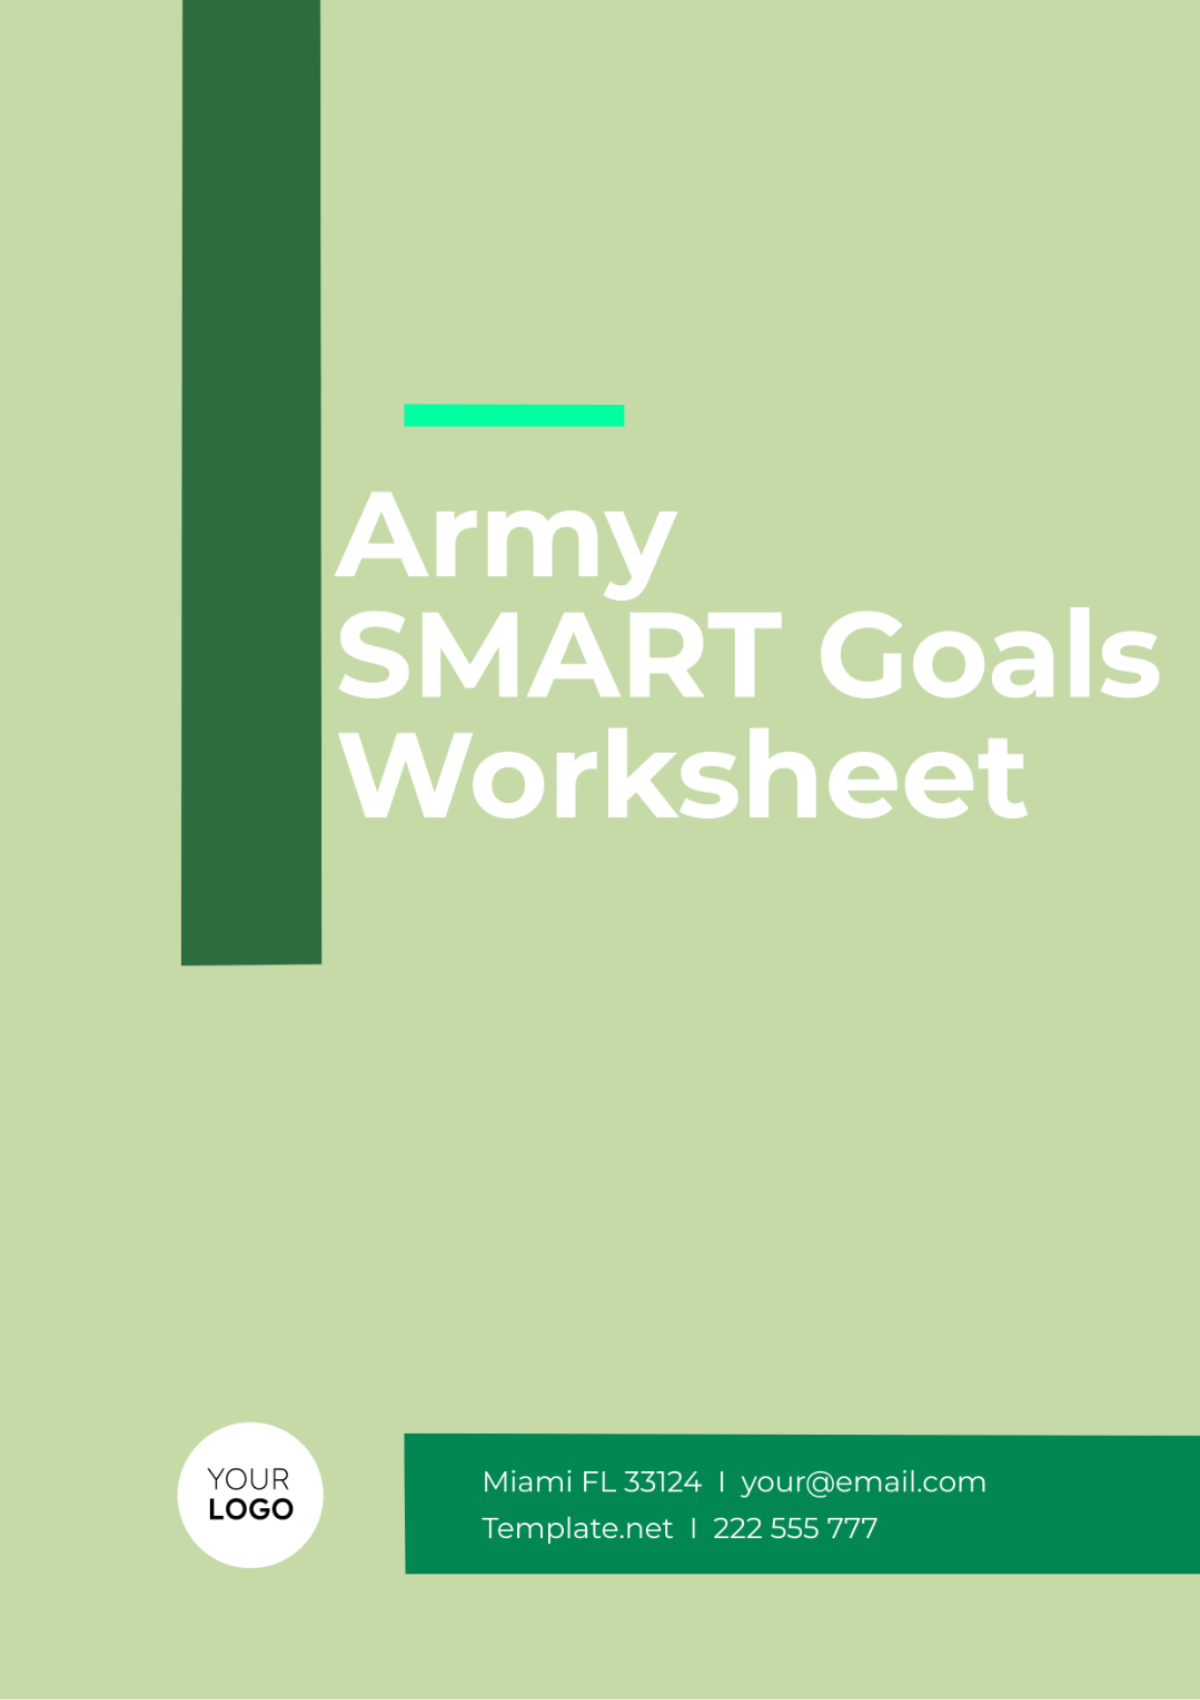 Army SMART Goals Worksheet Template